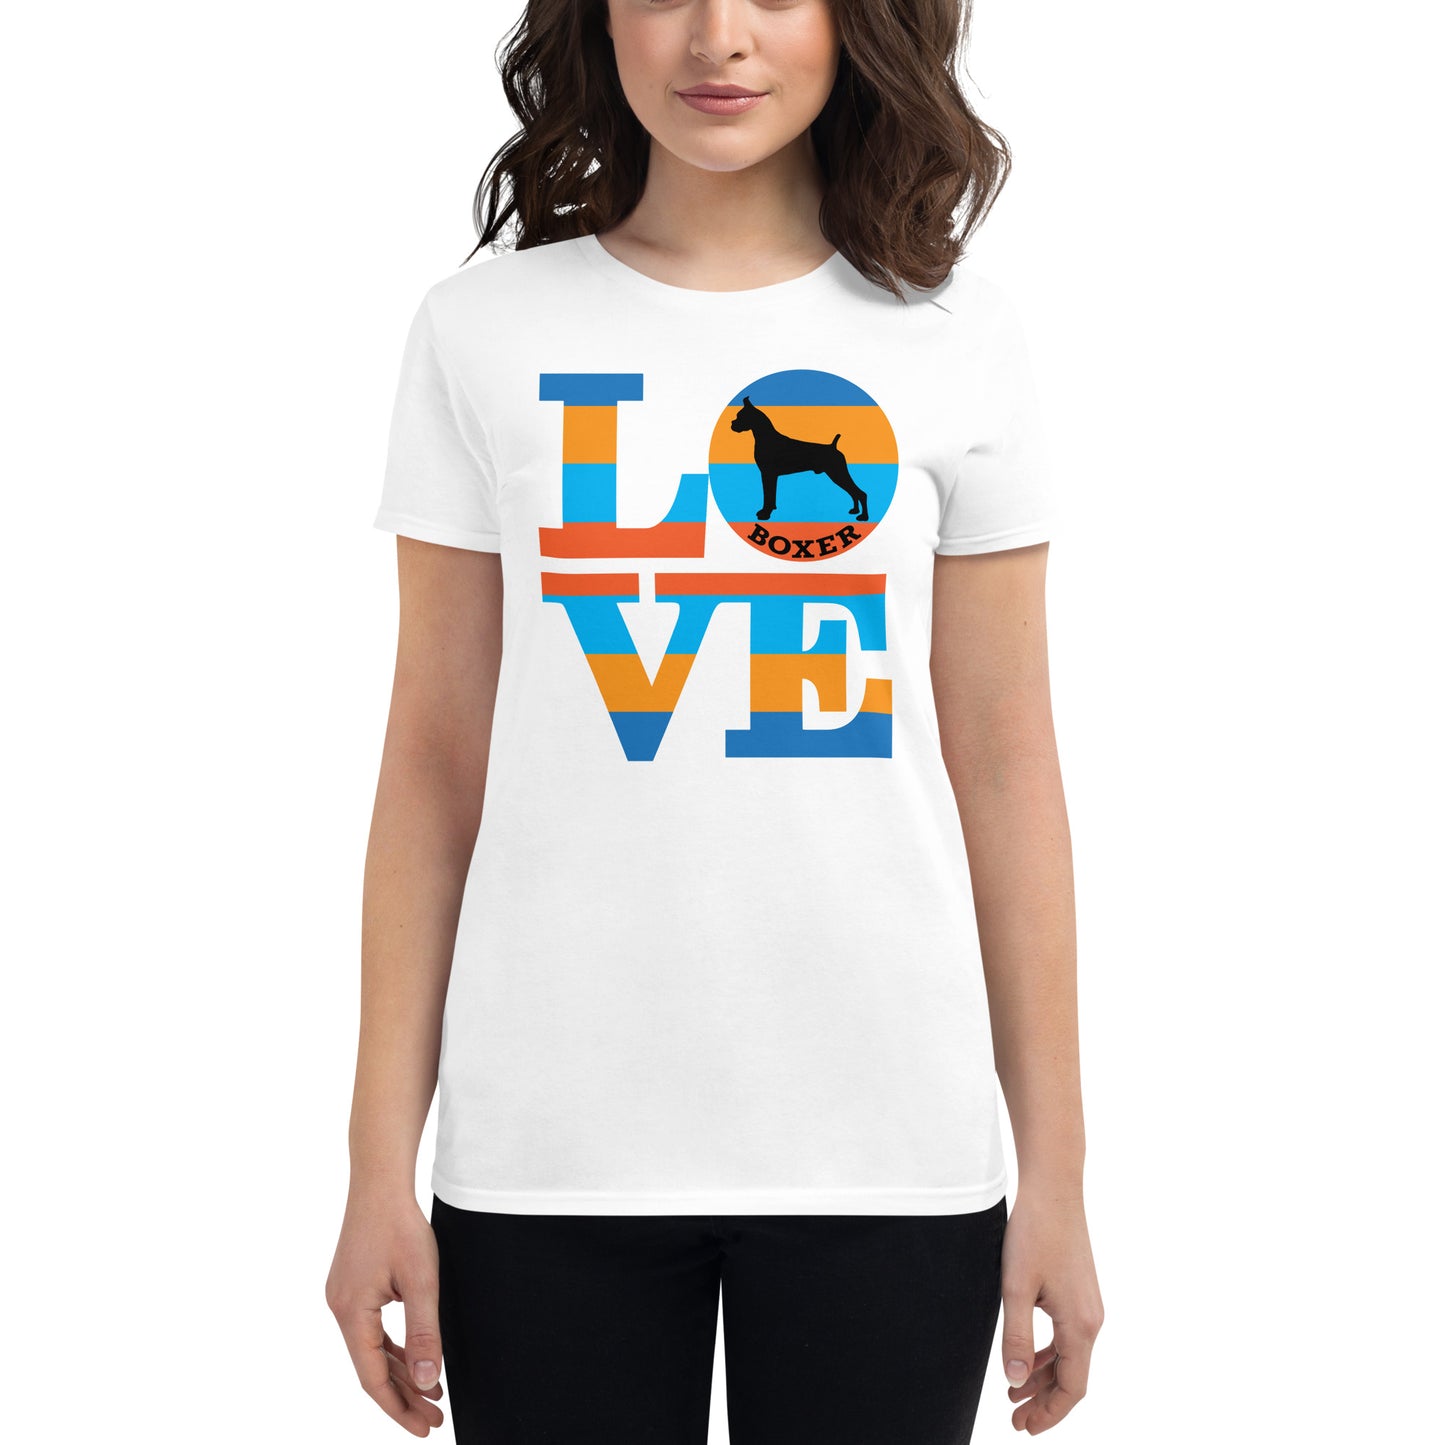 Boxer Love women’s white t-shirt by Dog Artistry.